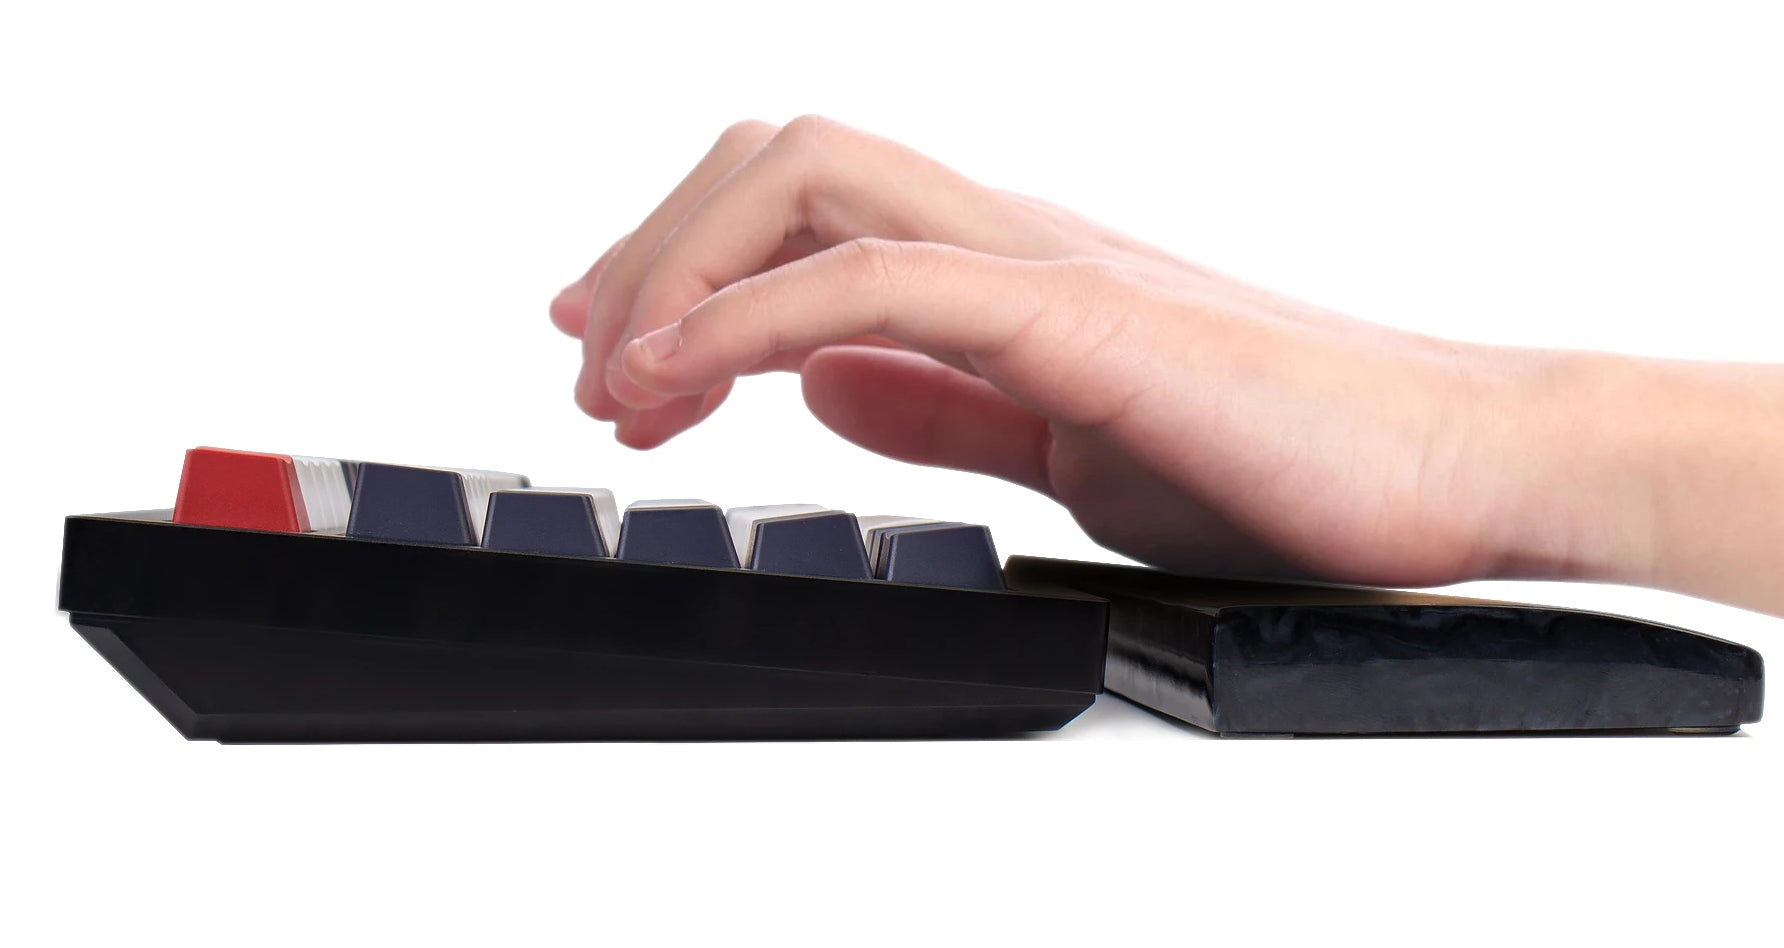 Keychron Resin Palm Rest ergonomic typing support